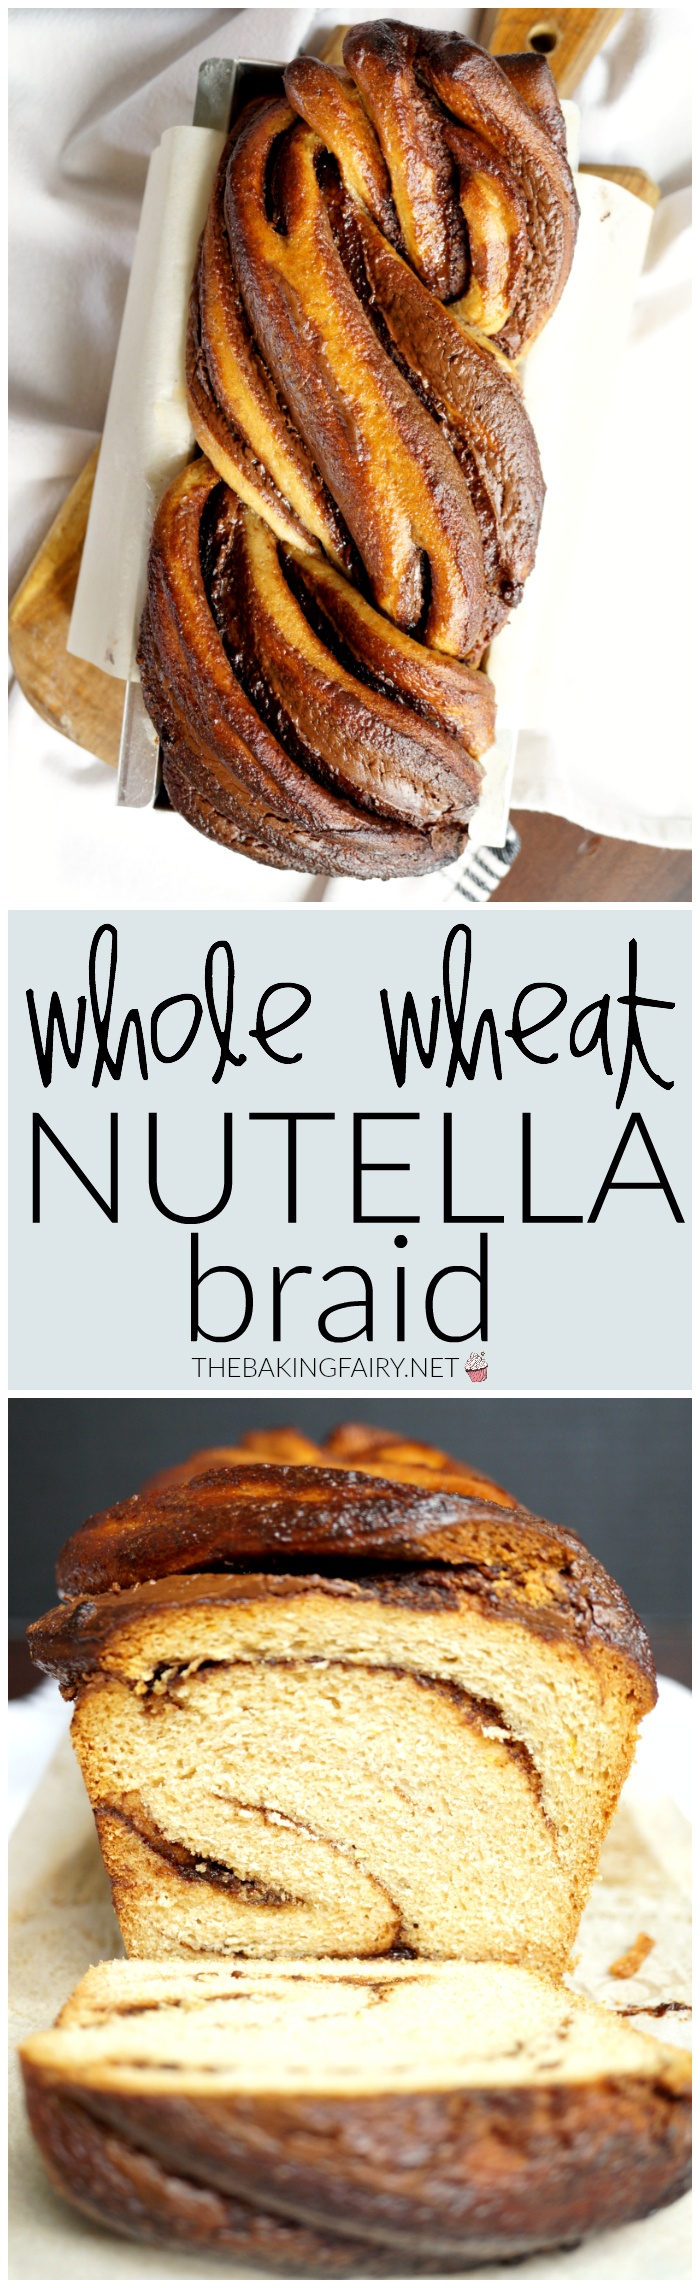 whole wheat Nutella braid | The Baking Fairy